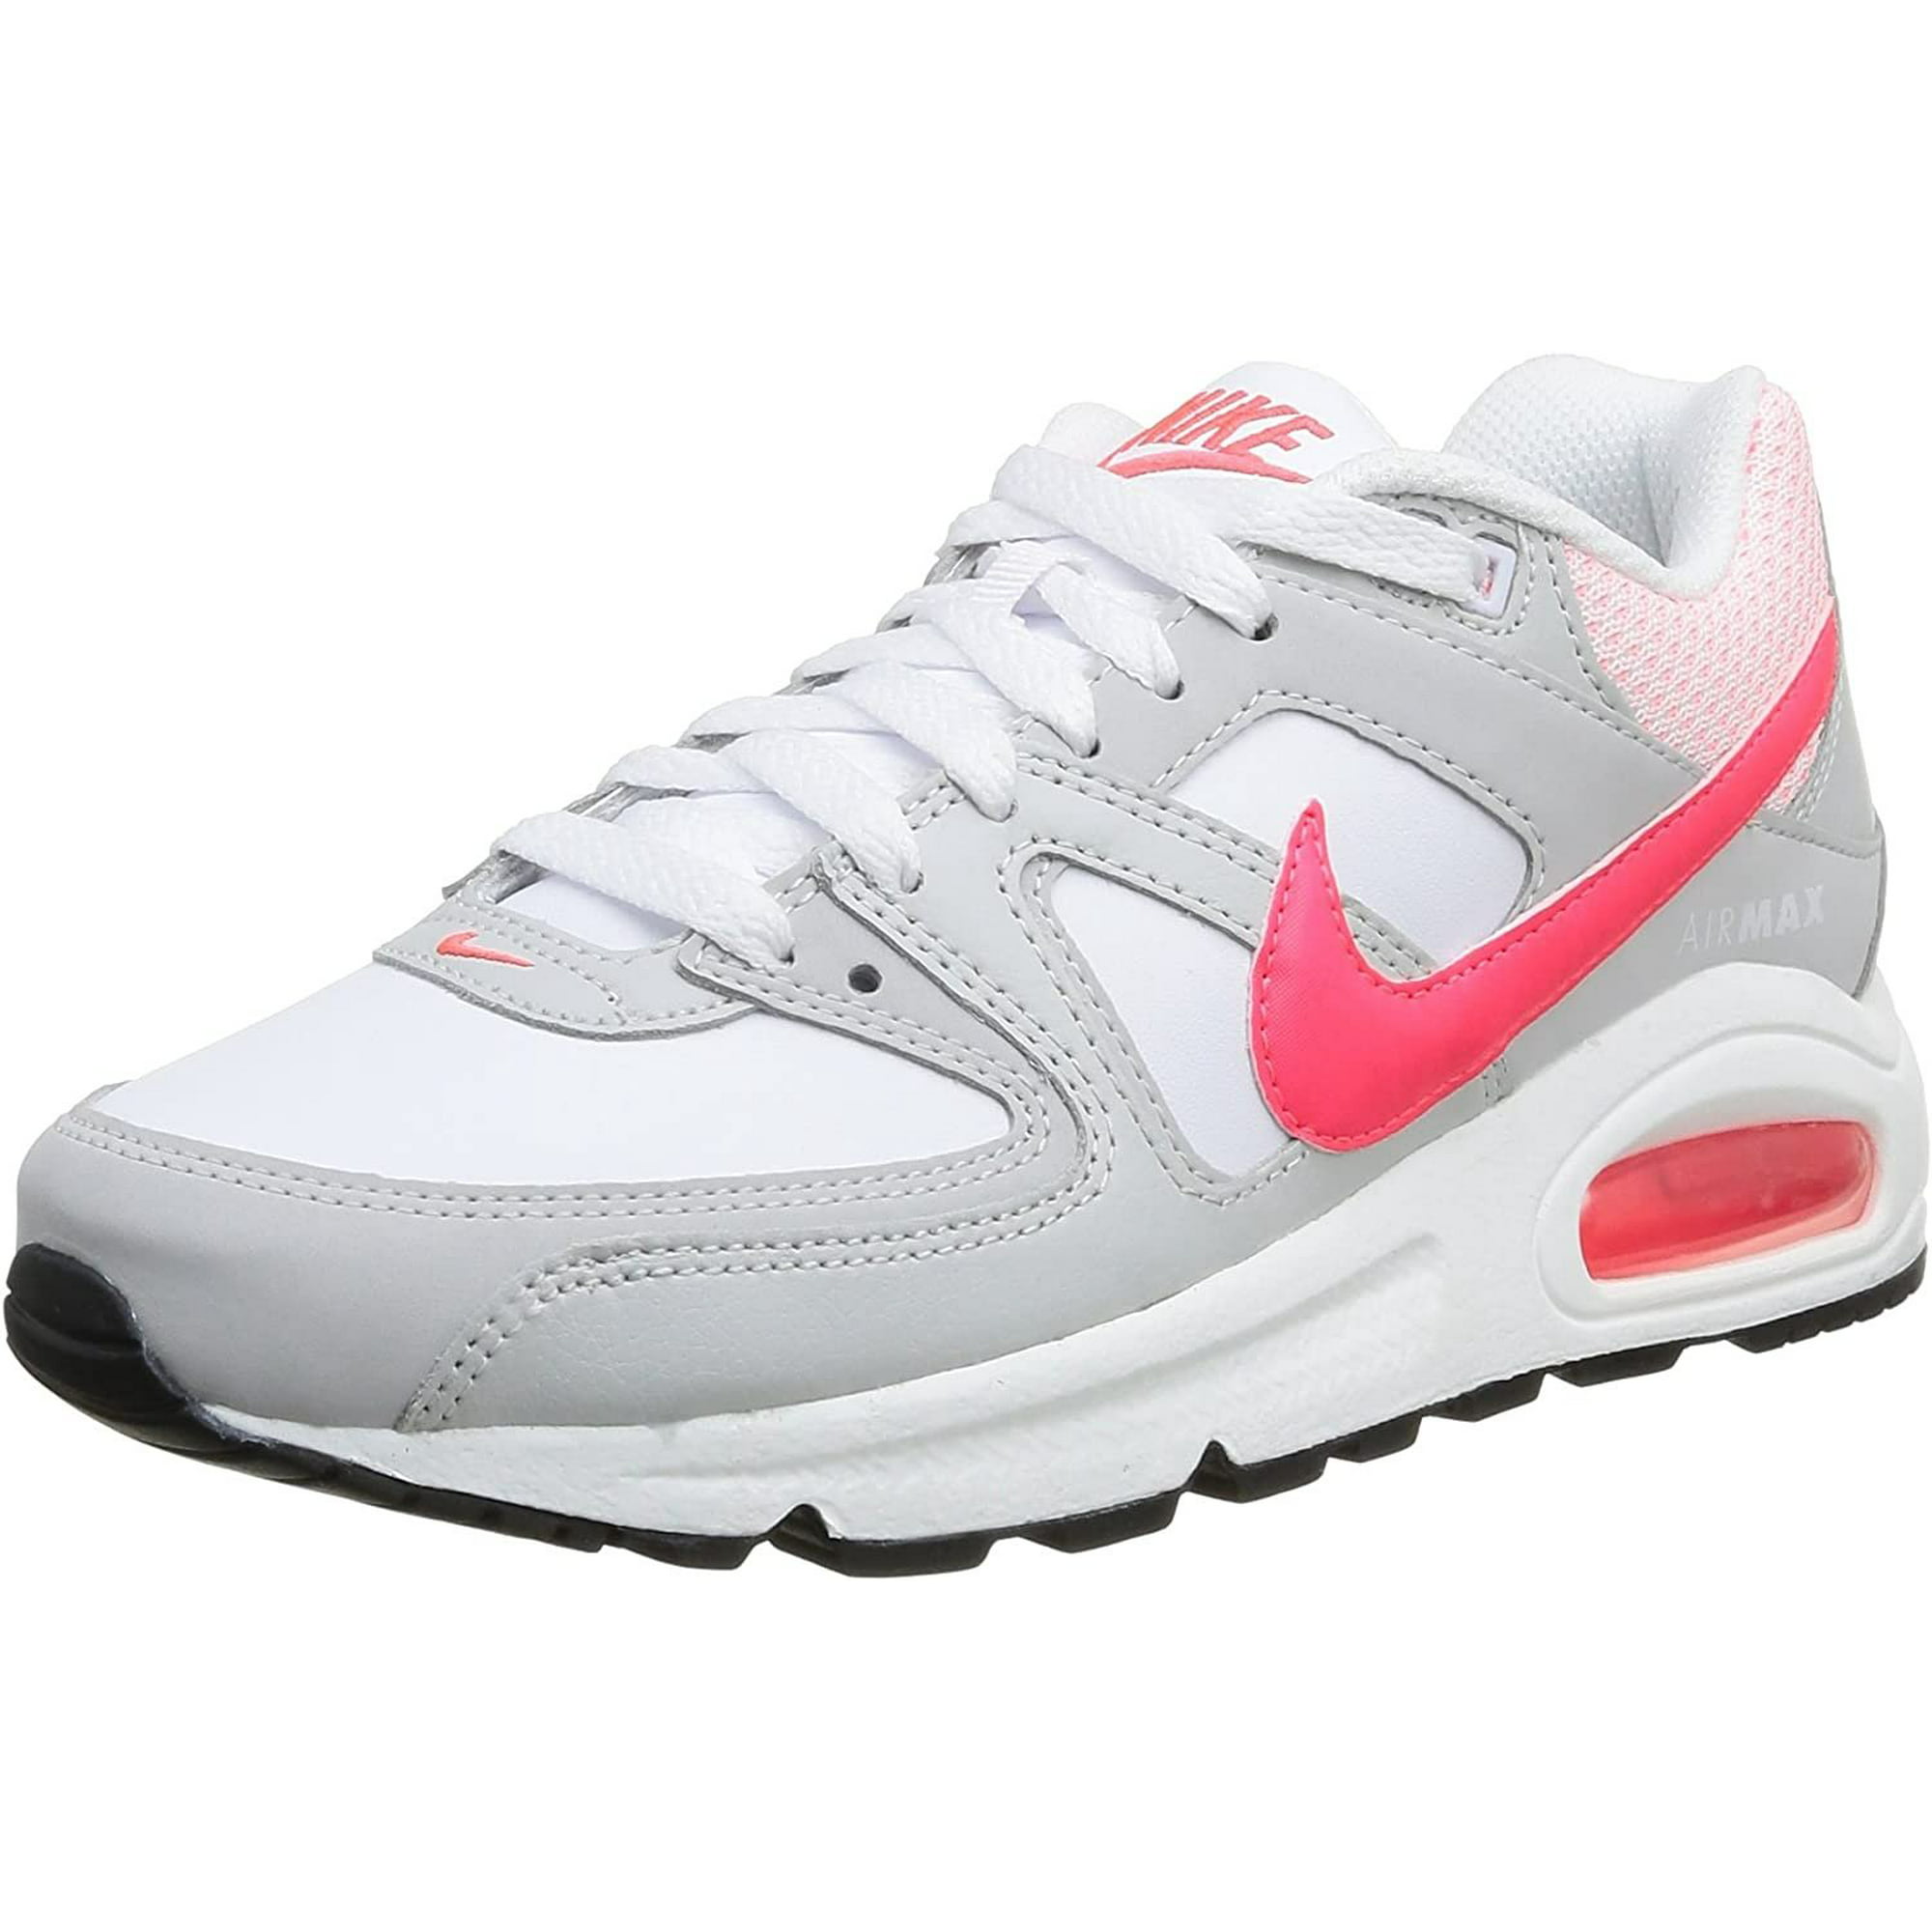 Nike Womens Max Command Running Trainers 397690 Sneakers Shoes UK 4.5 US 7 EU 38, White Hyper Punch - Walmart.com